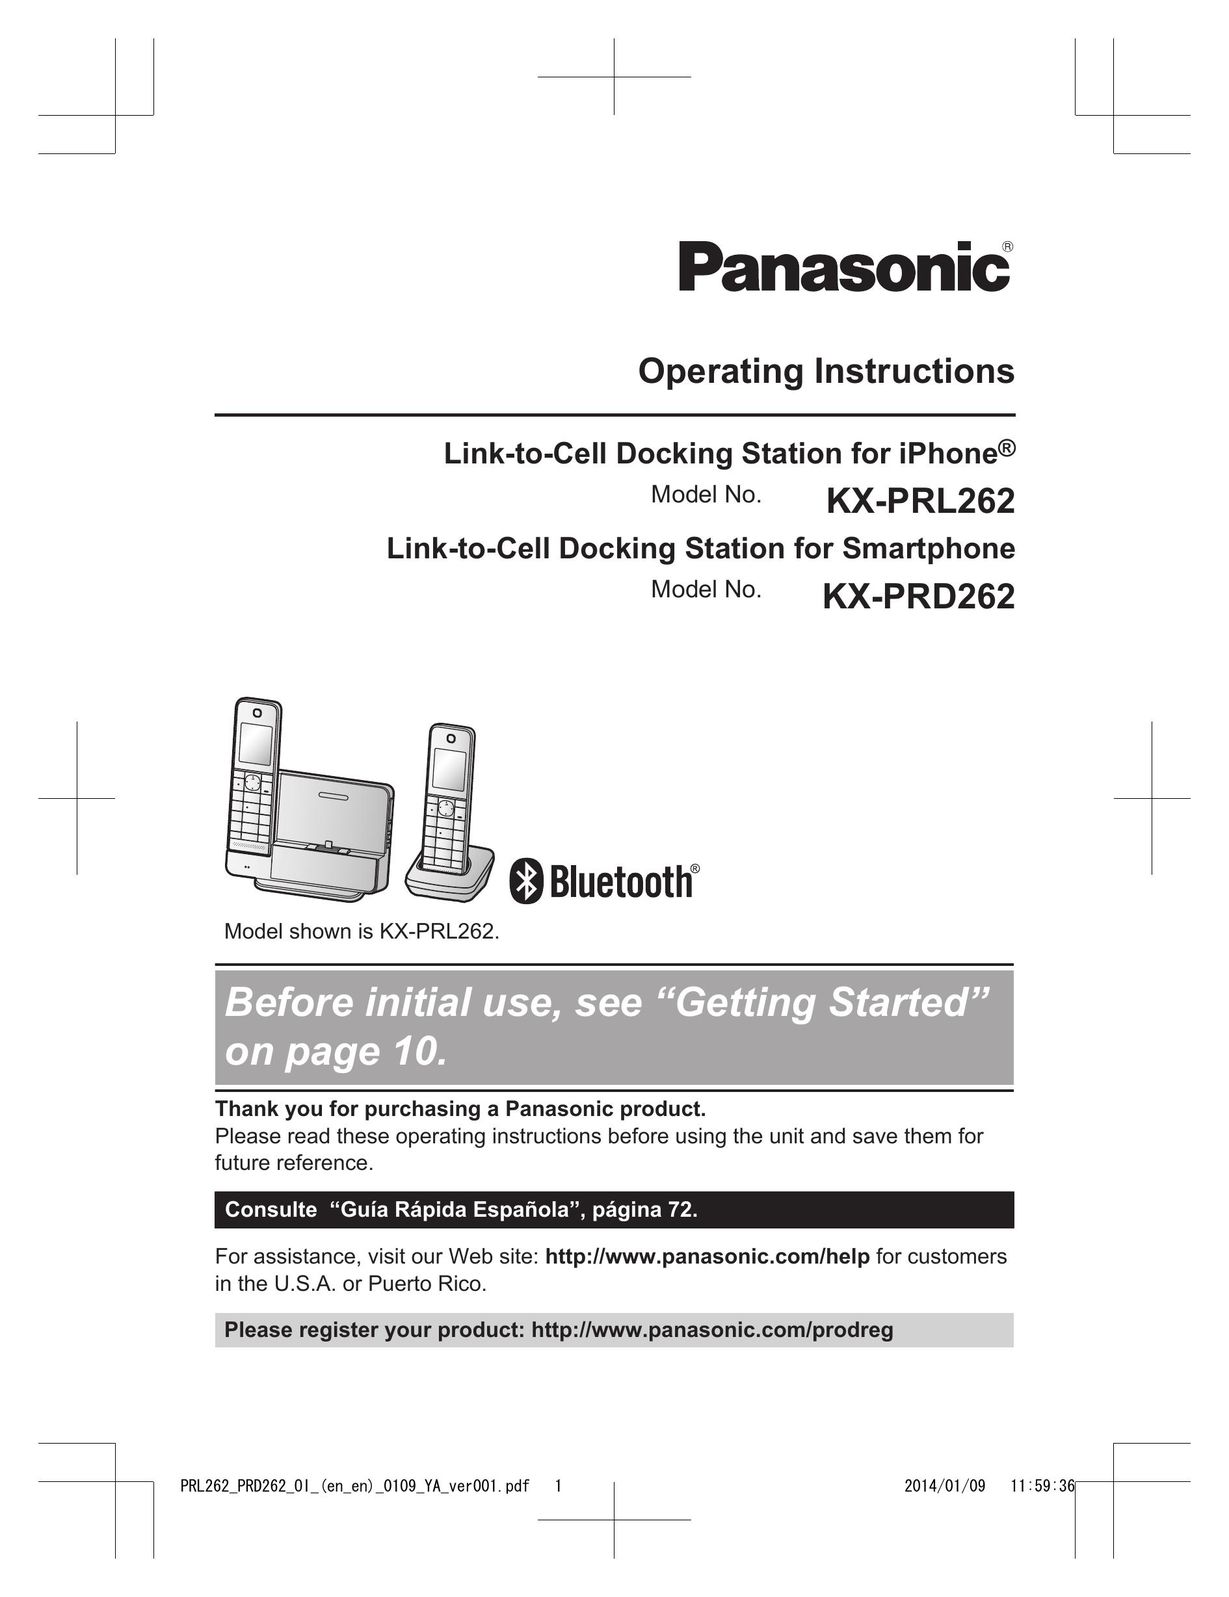 Panasonic KX-PRD262 MP3 Docking Station User Manual